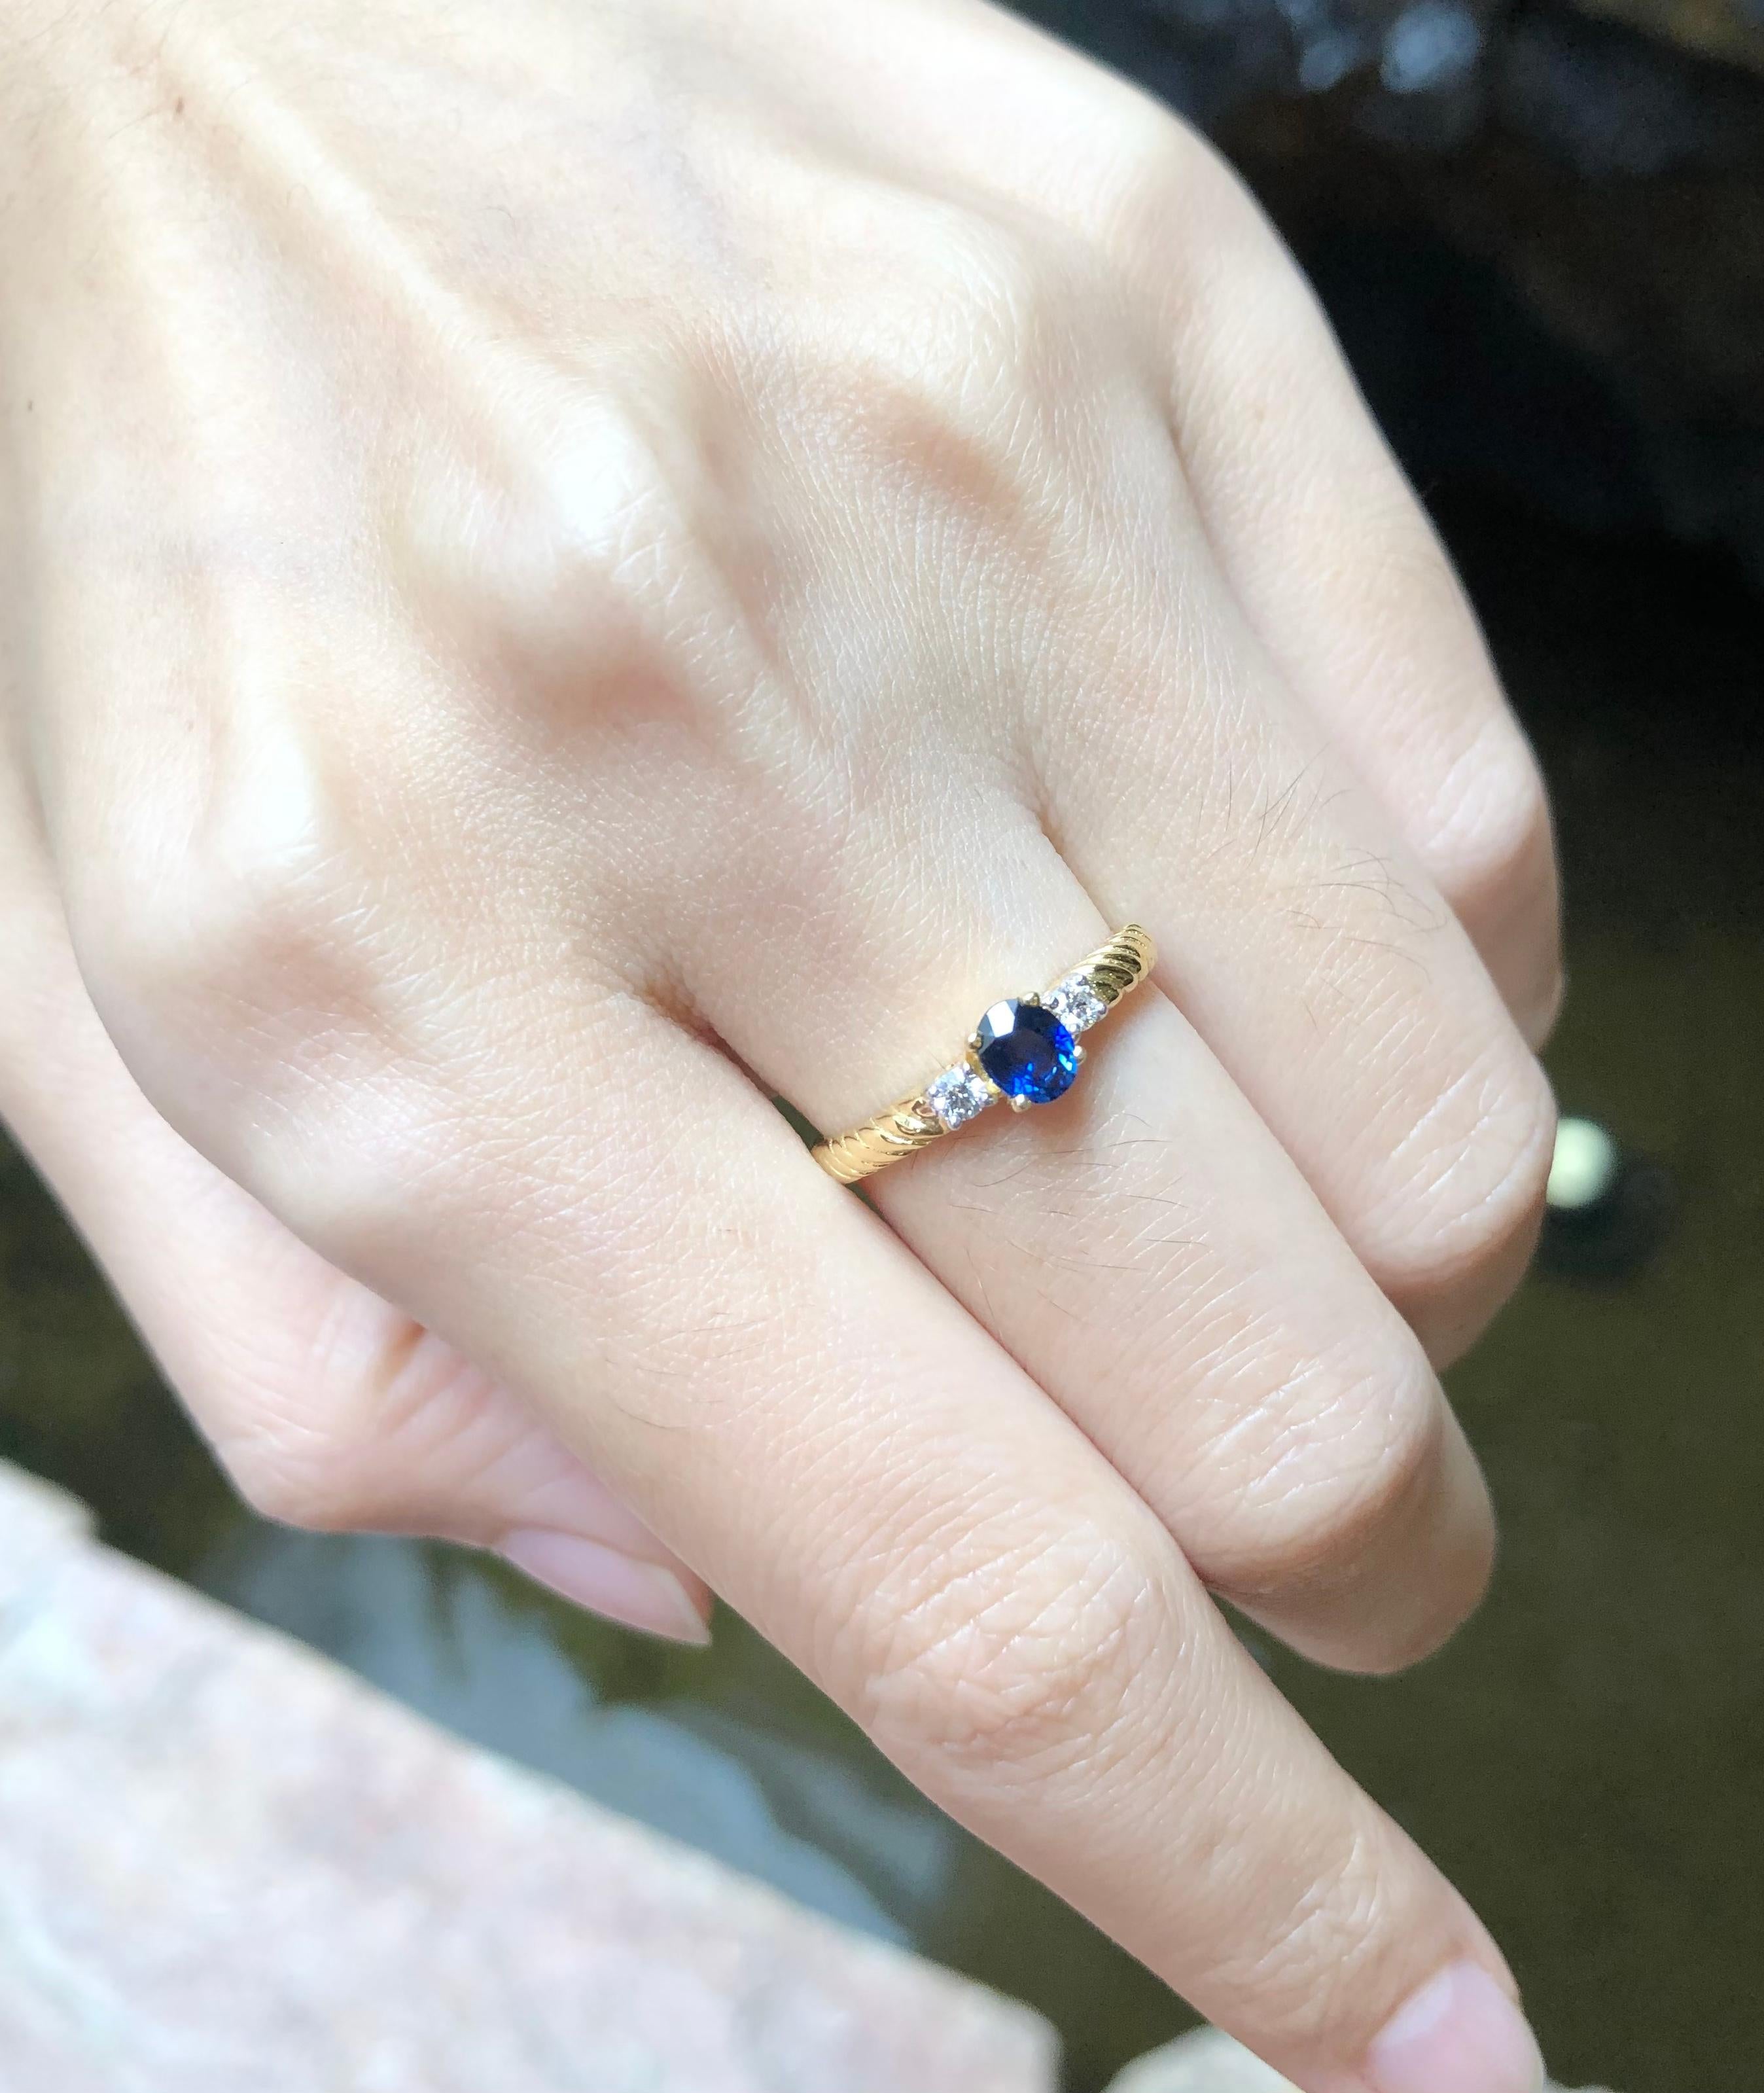 Blue Sapphire 0.39 carat with Diamond 0.09 carat Ring set in 18 Karat Gold Settings

Width:  0.9 cm 
Length: 0.5 cm
Ring Size: 52
Total Weight: 2.15 grams

Blue Sapphire
Width:  0.4 cm 
Length: 0.5 cm

